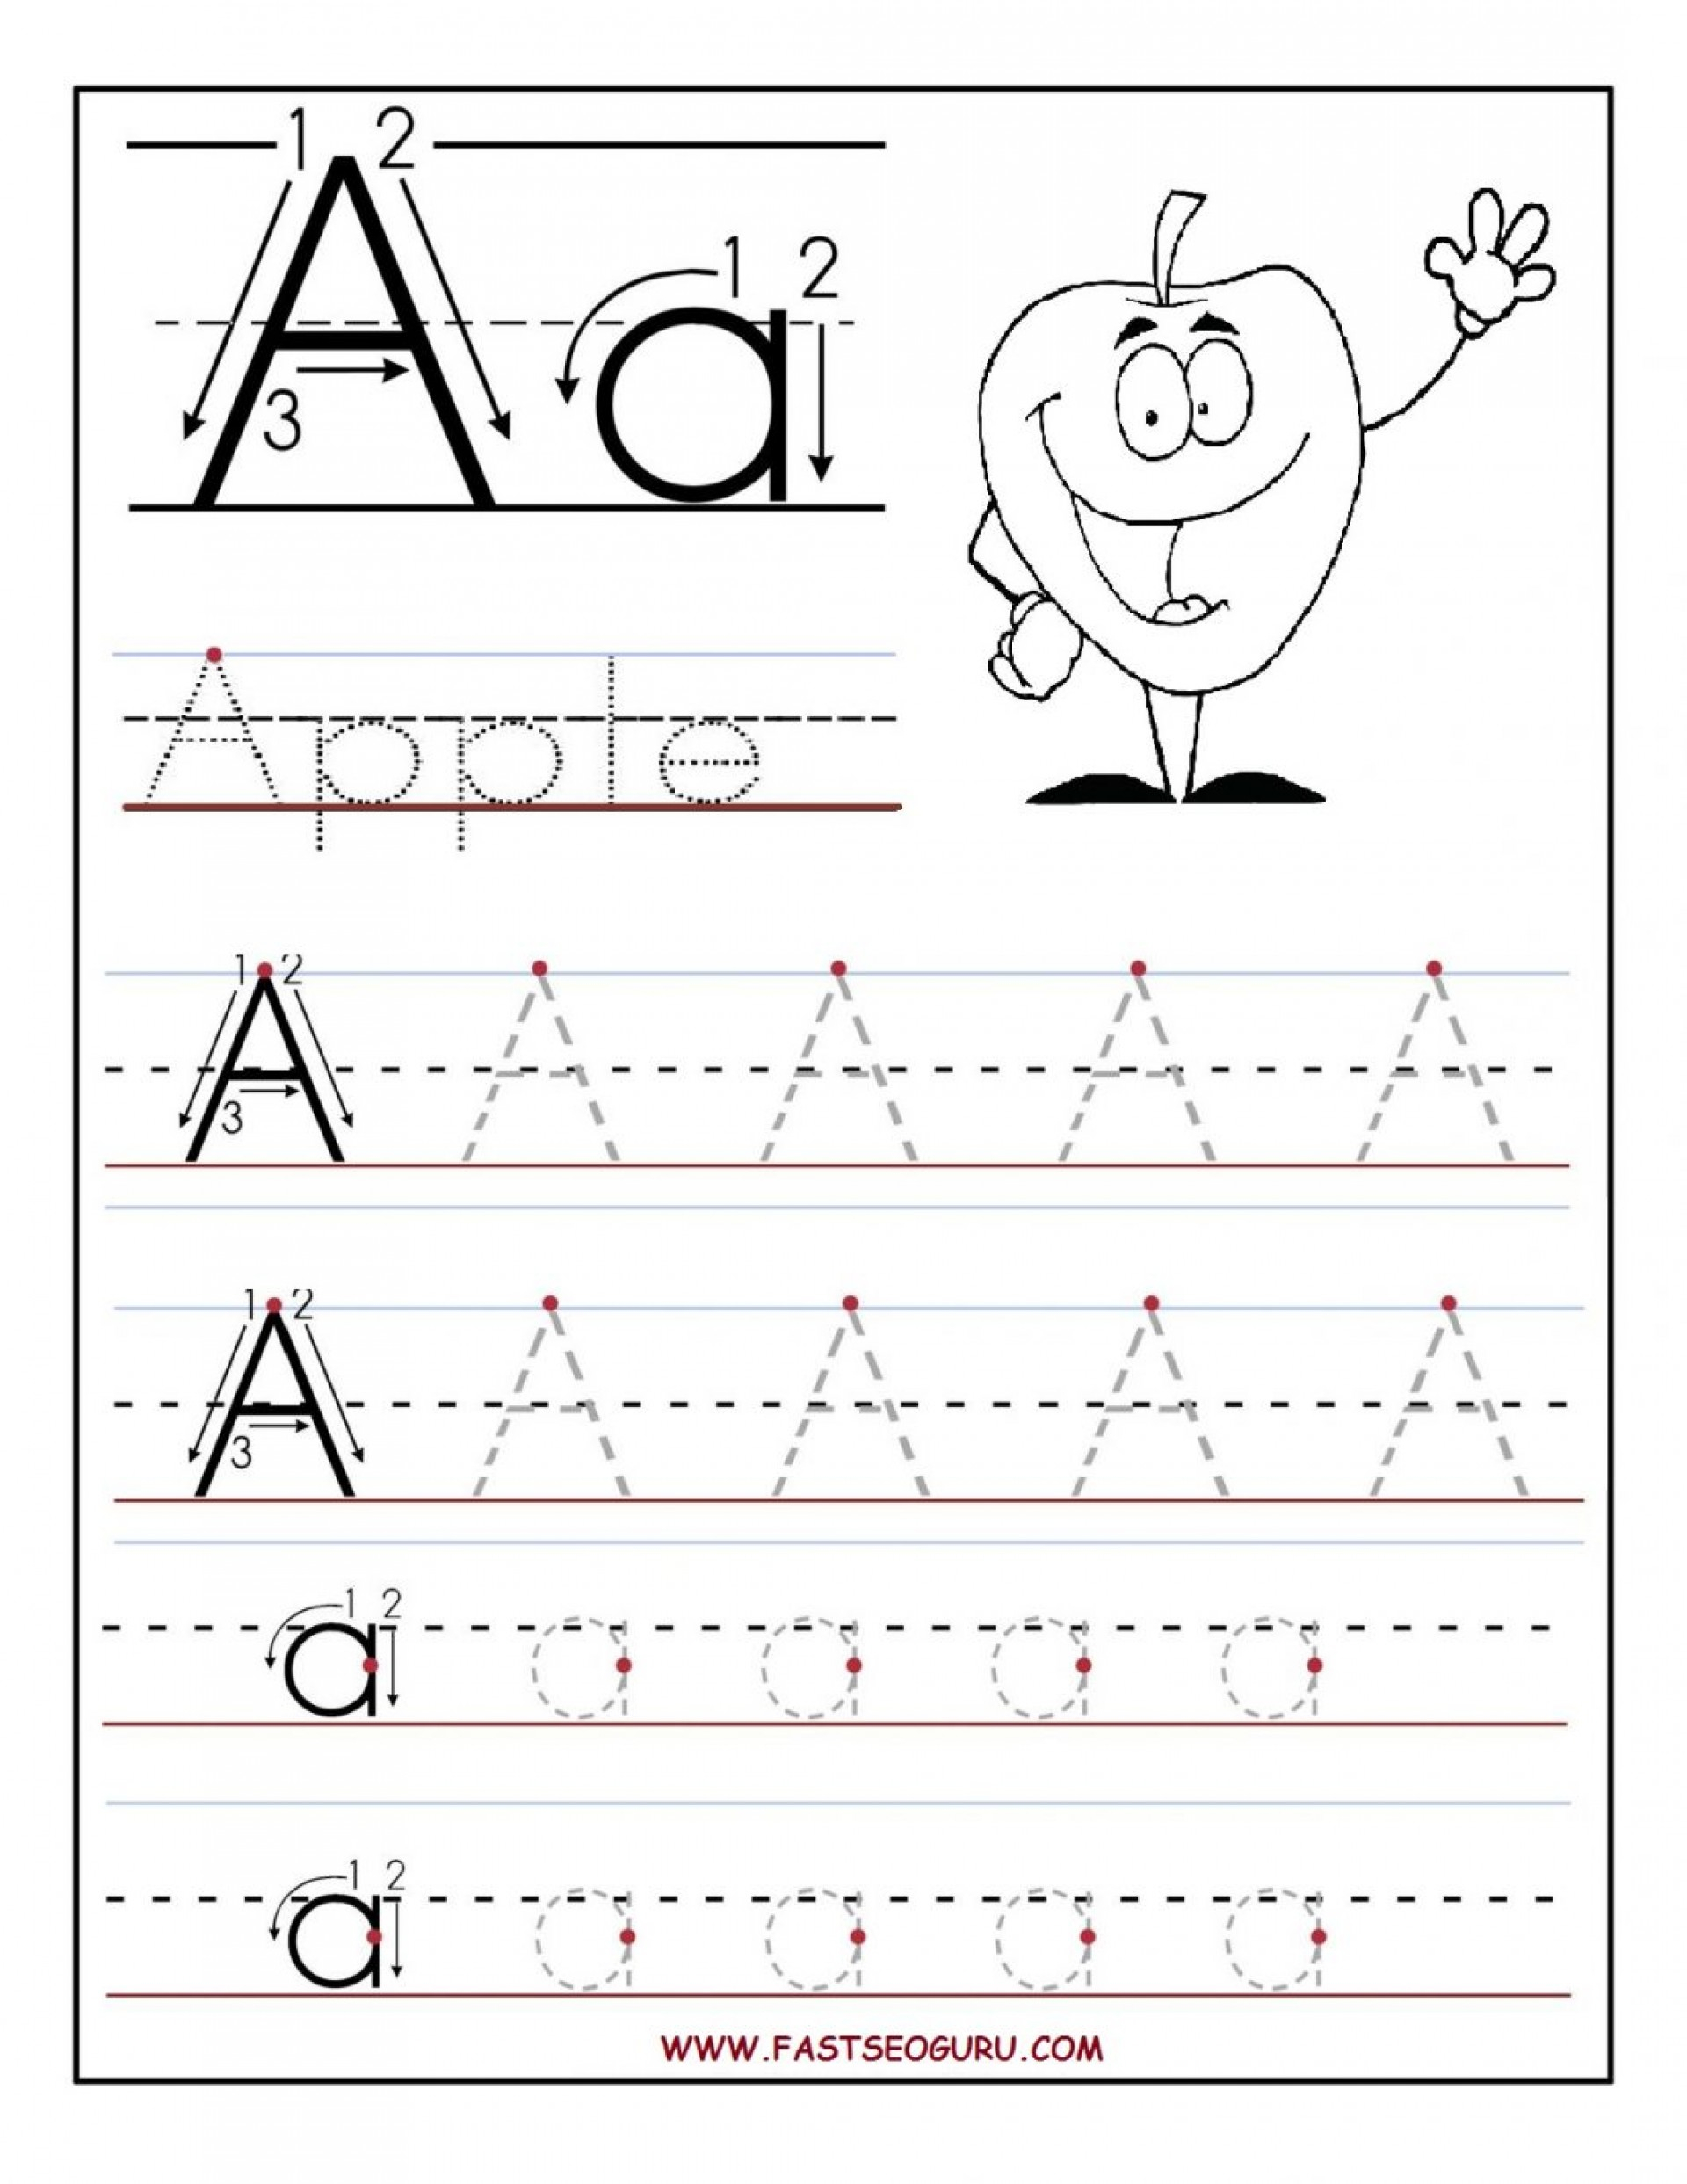 Preschool Letter Worksheets Free Printables - Clover Hatunisi